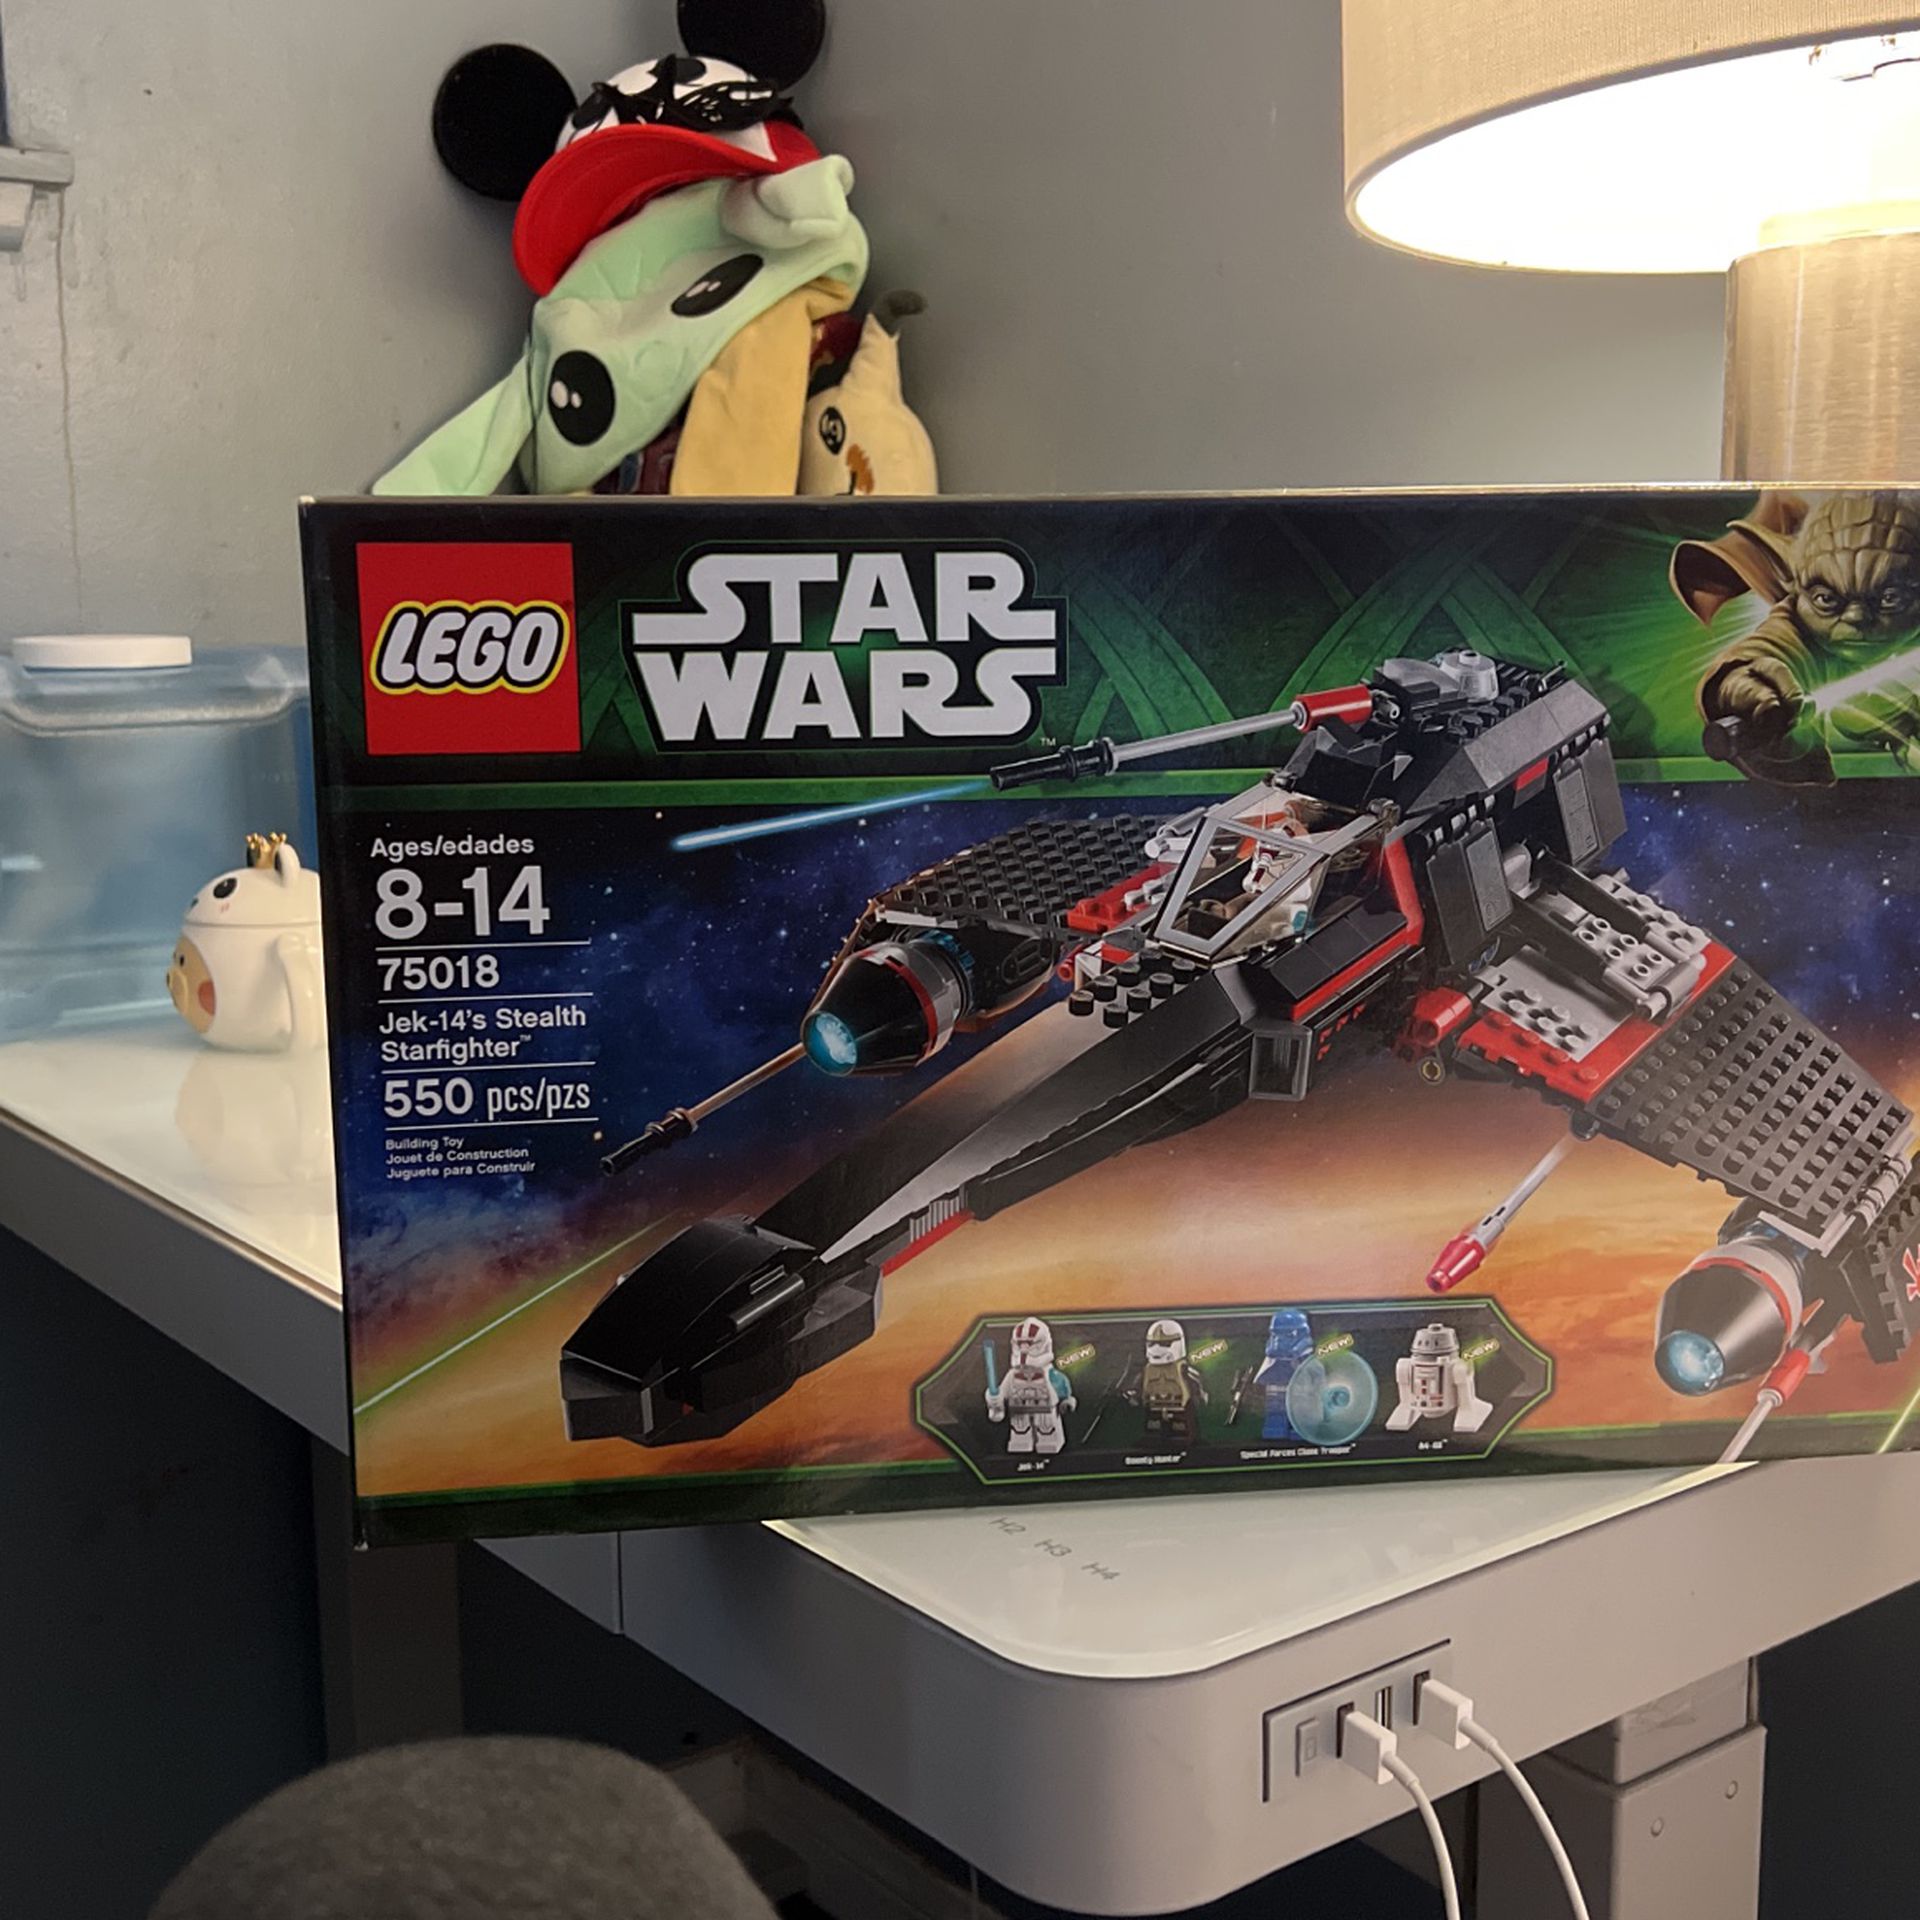 Lego Star Wars 75018 Jerk-14's Stealth Starfighter for Sale in 